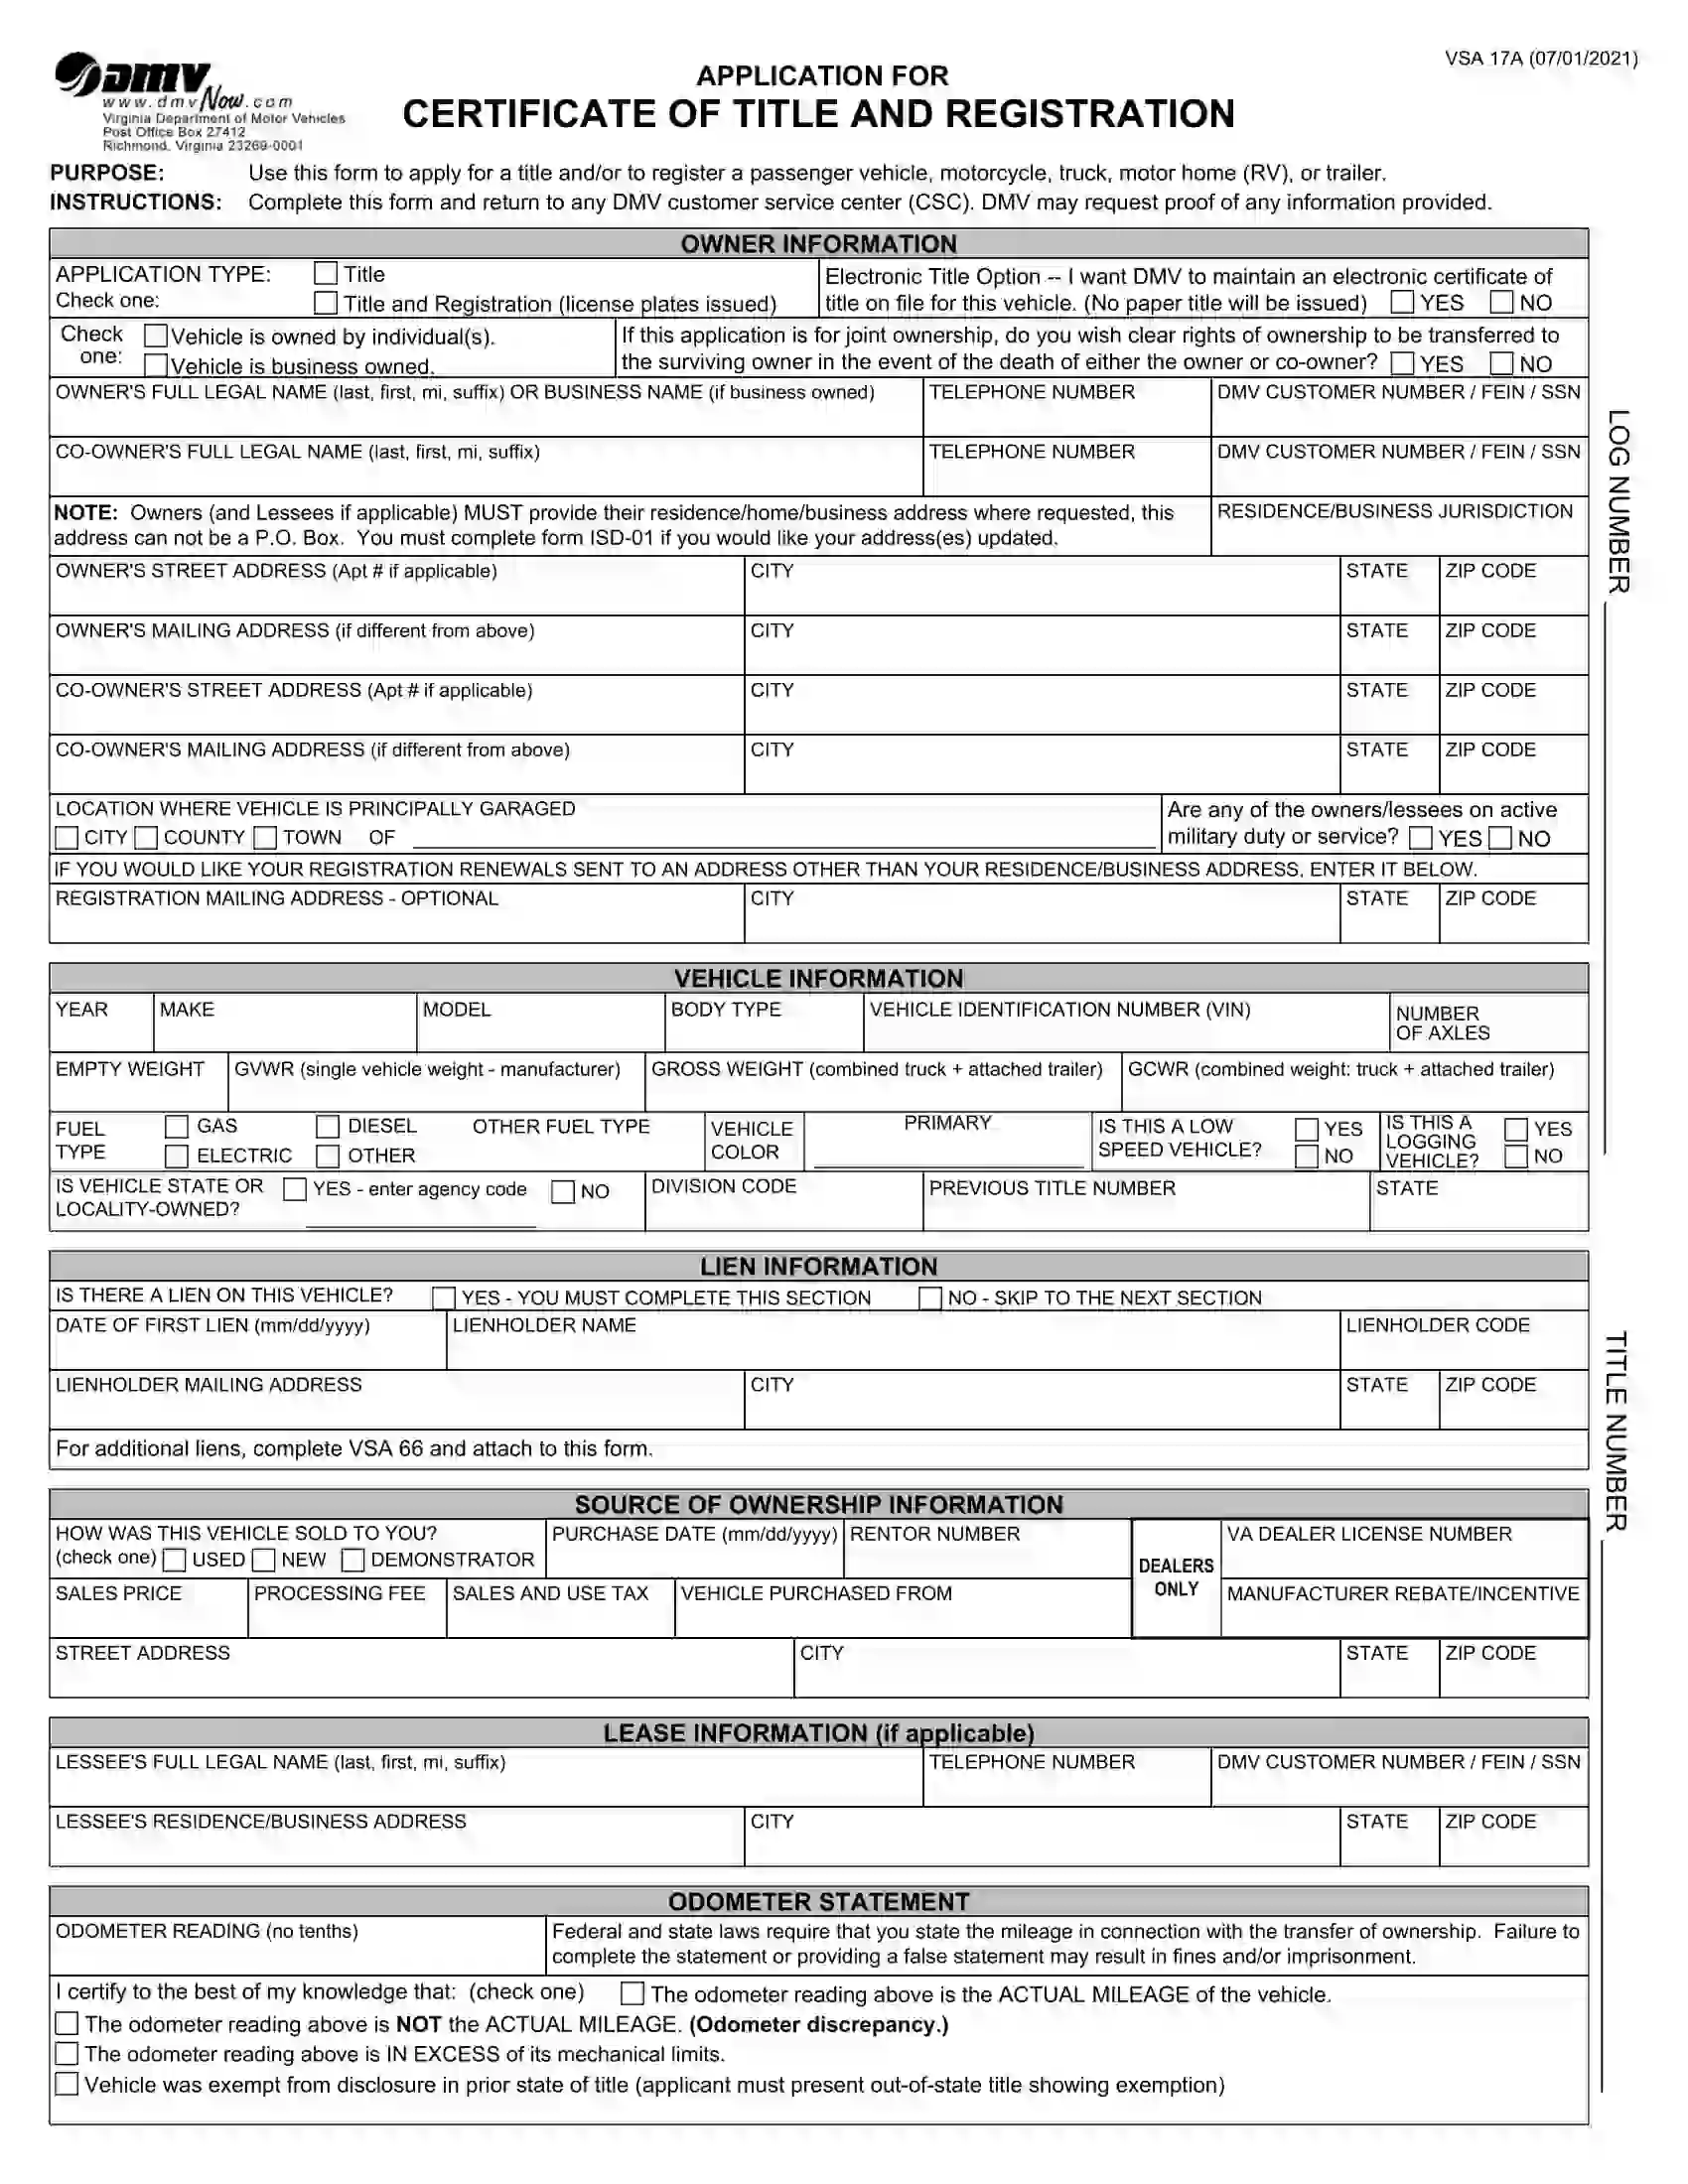 (Vehicle) Form VSA 17A